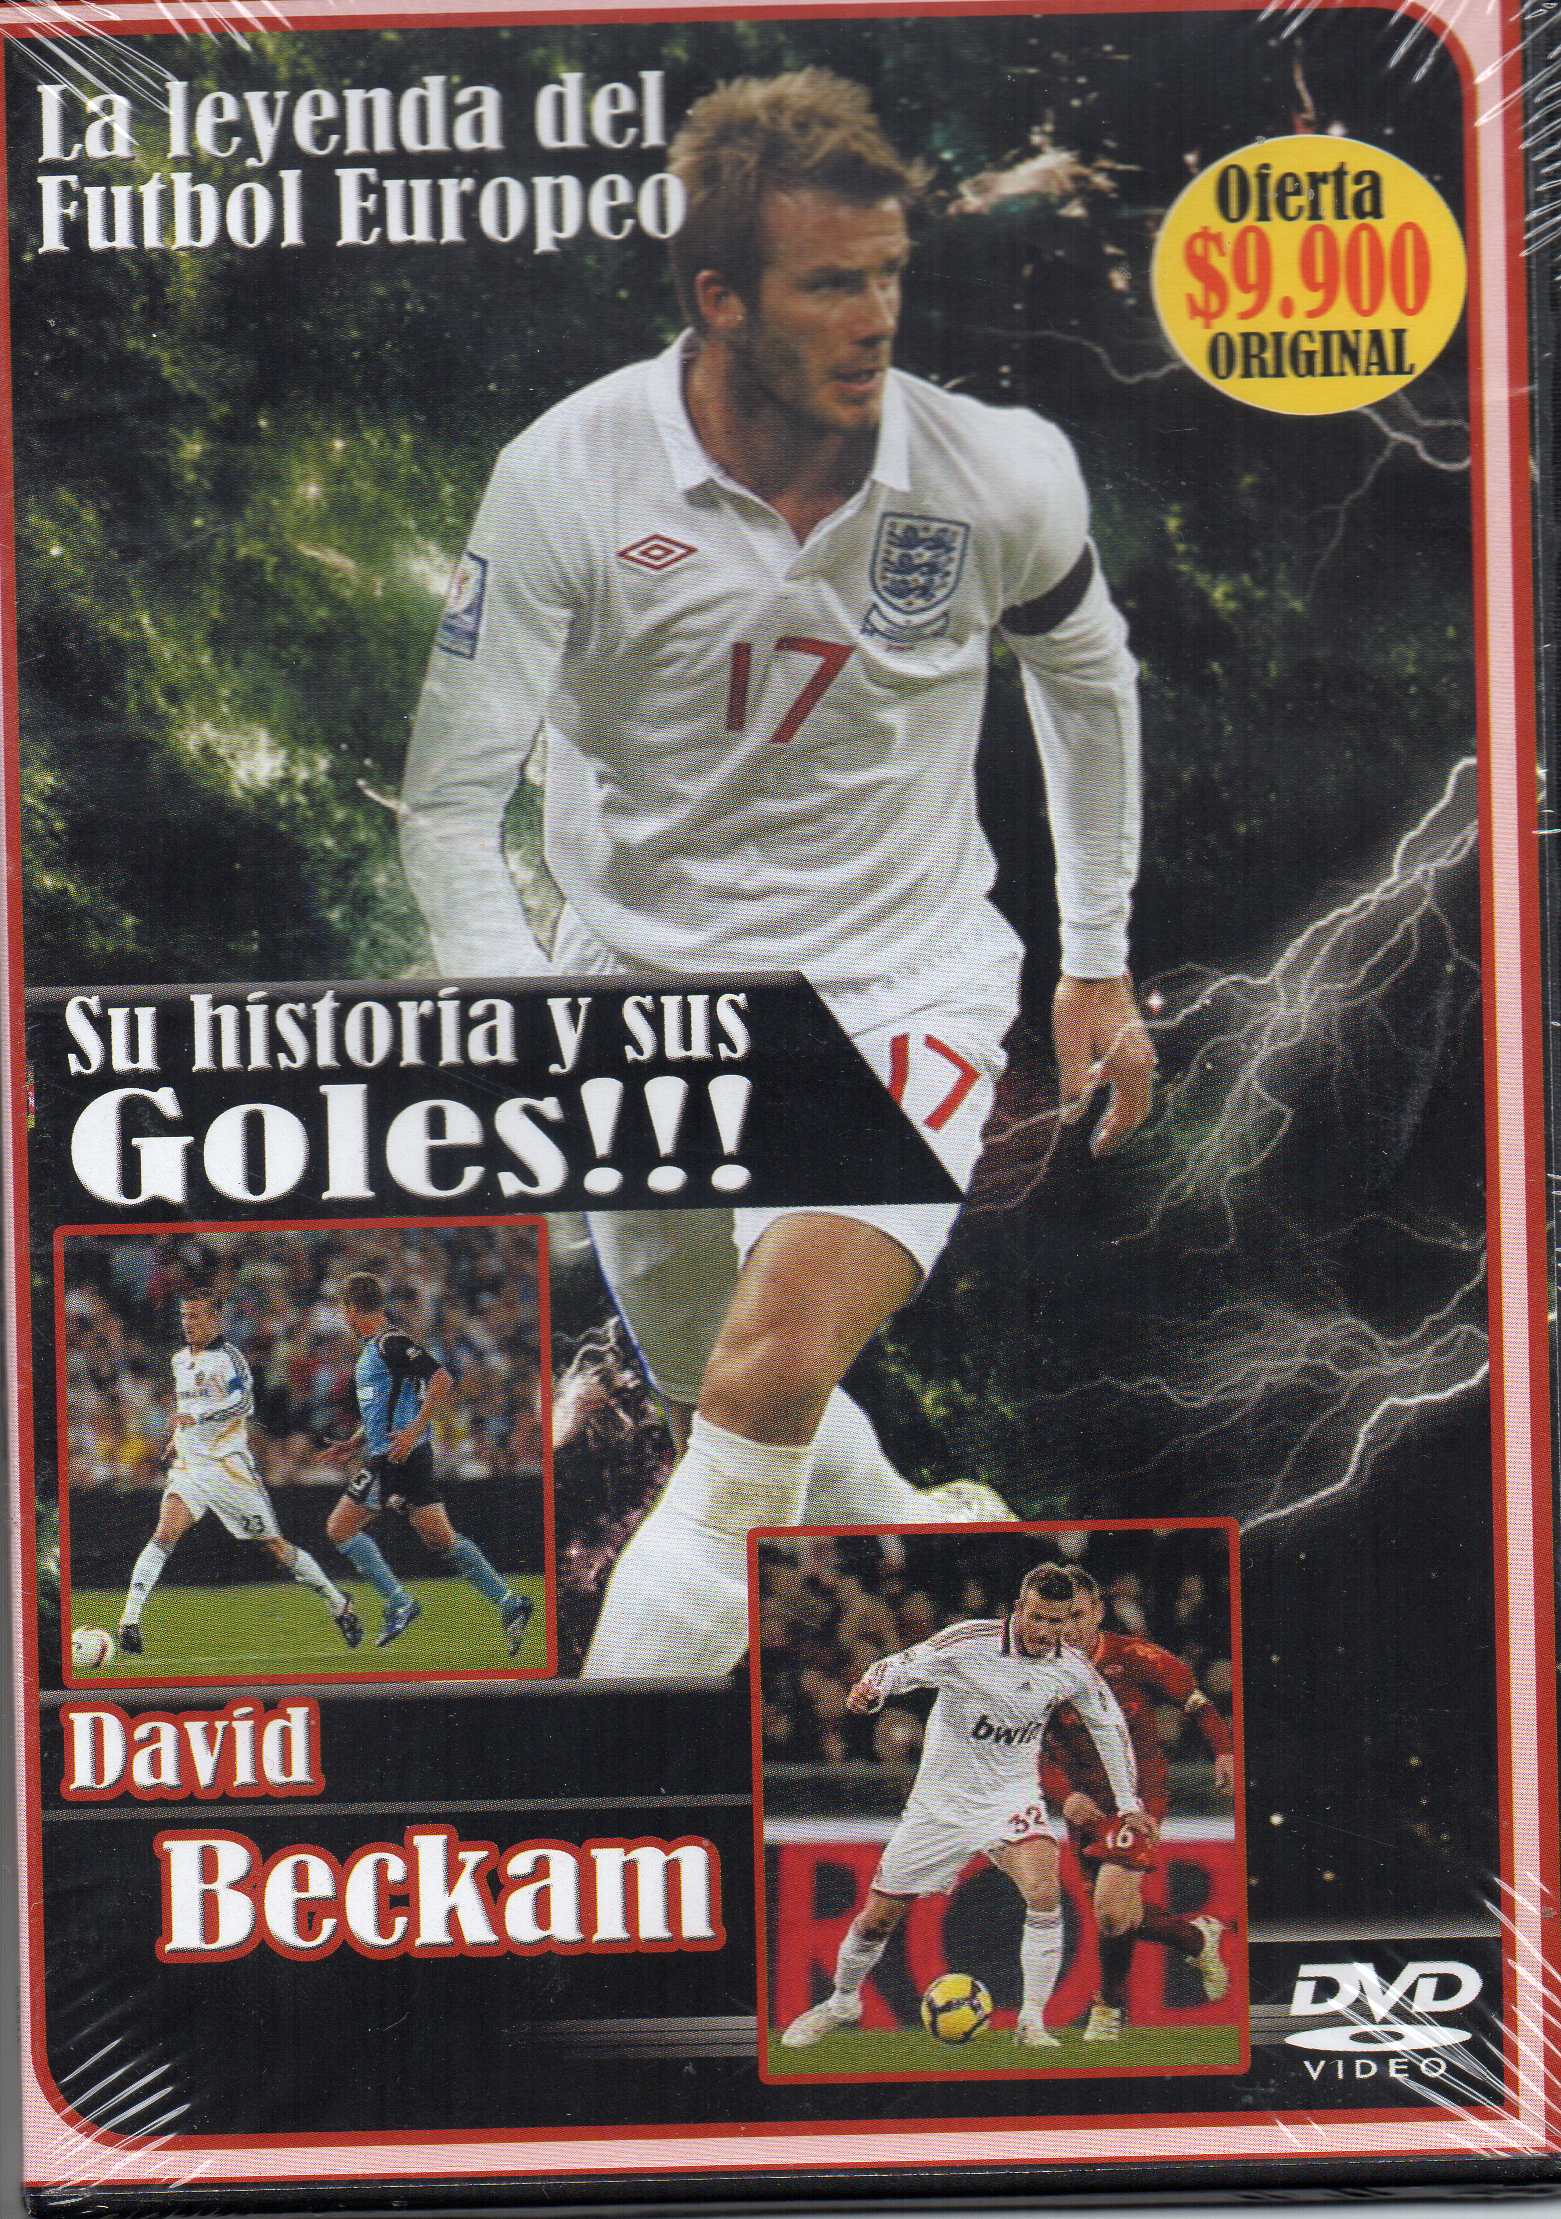 DVD David Beckam - La leyenda del futbol Europeo